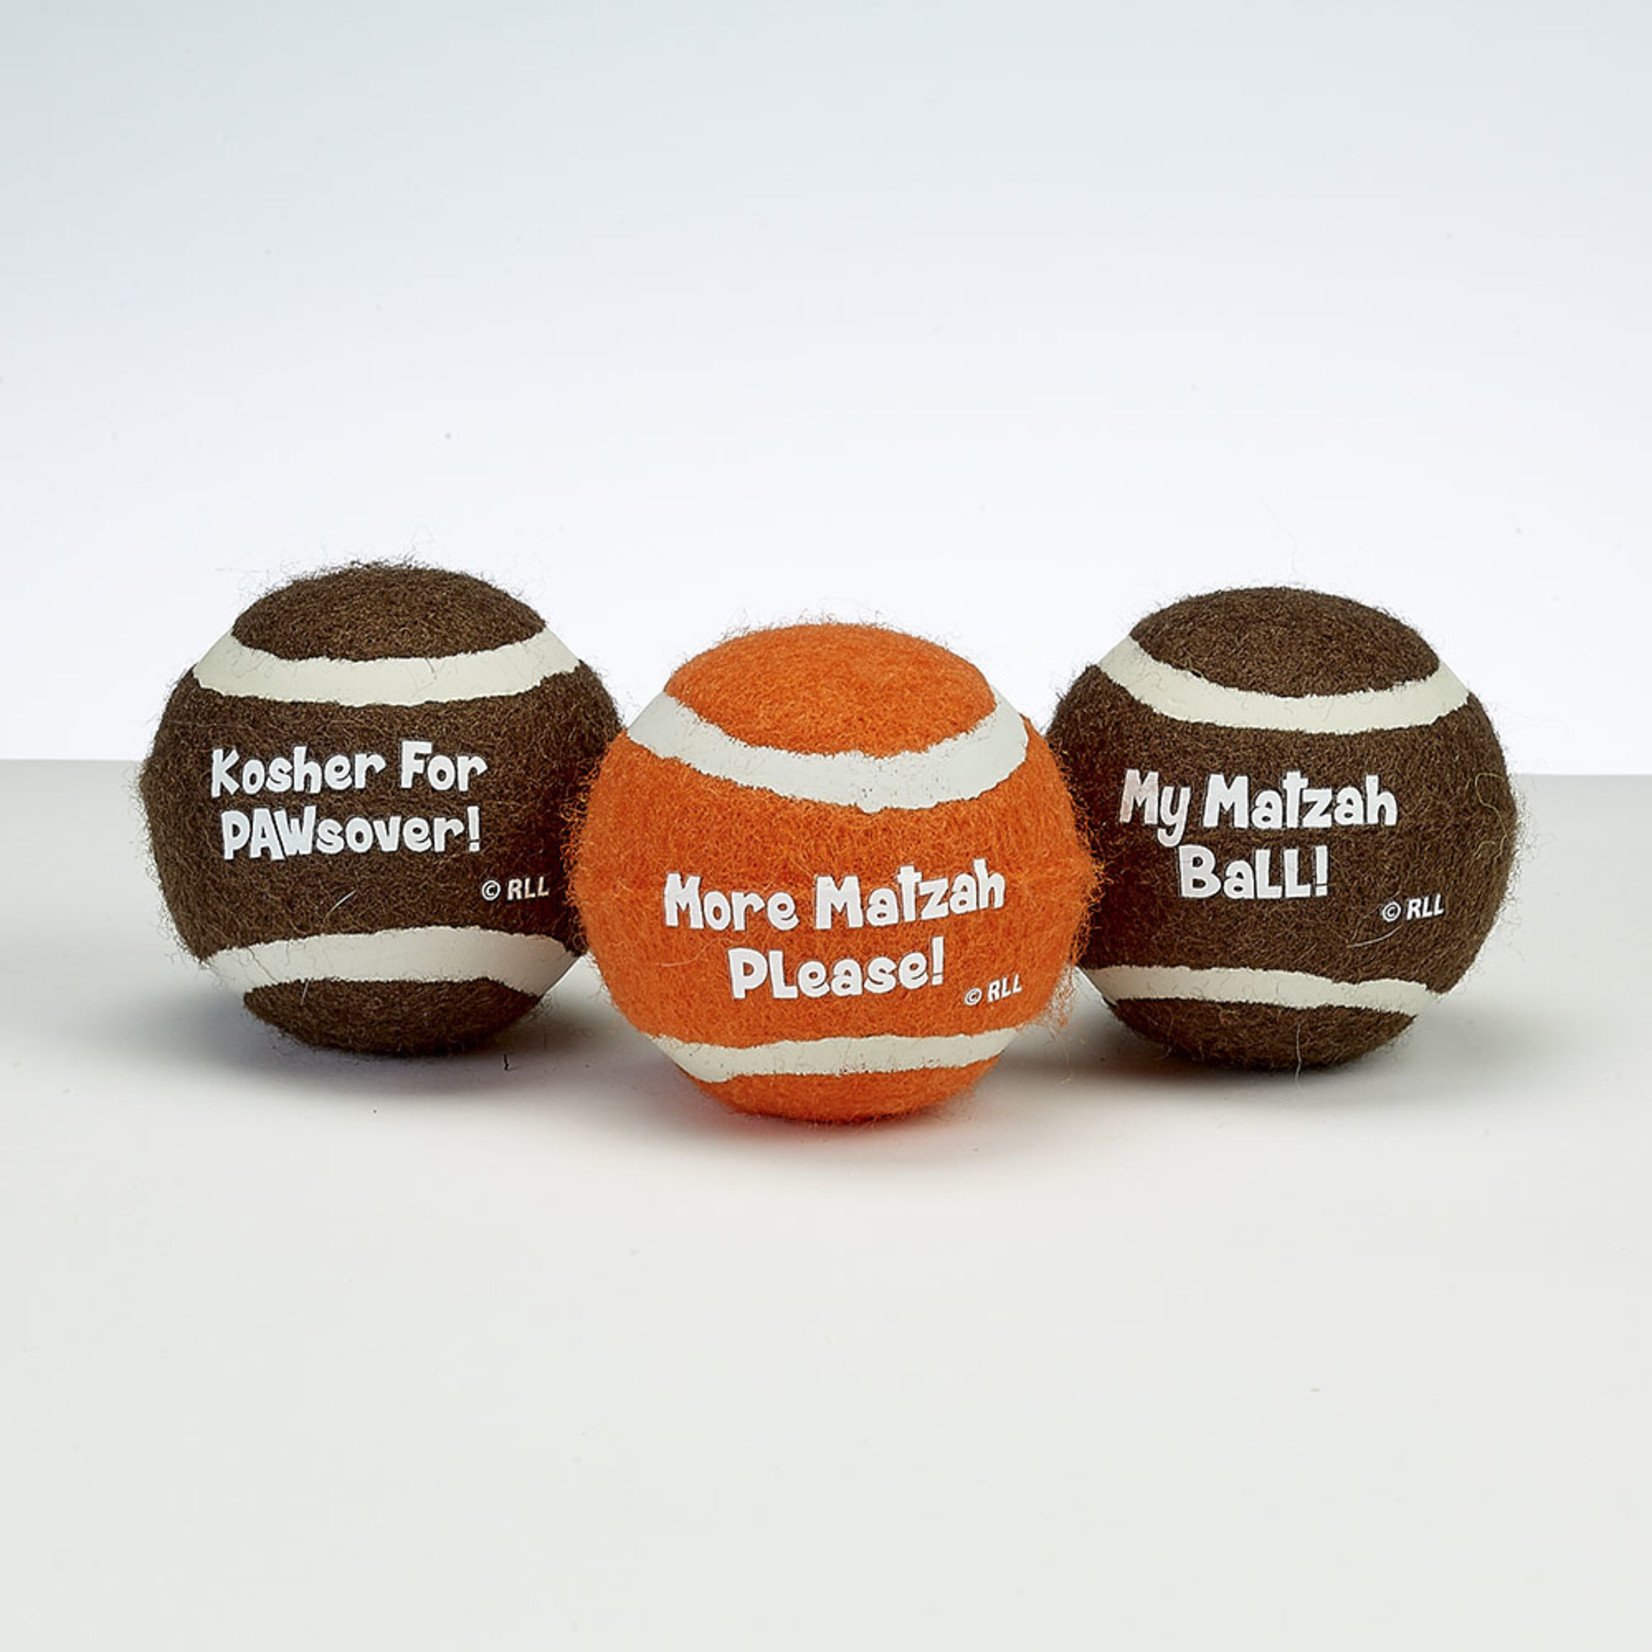 Passover Dog Toy, Tennis Balls, 3-Pack